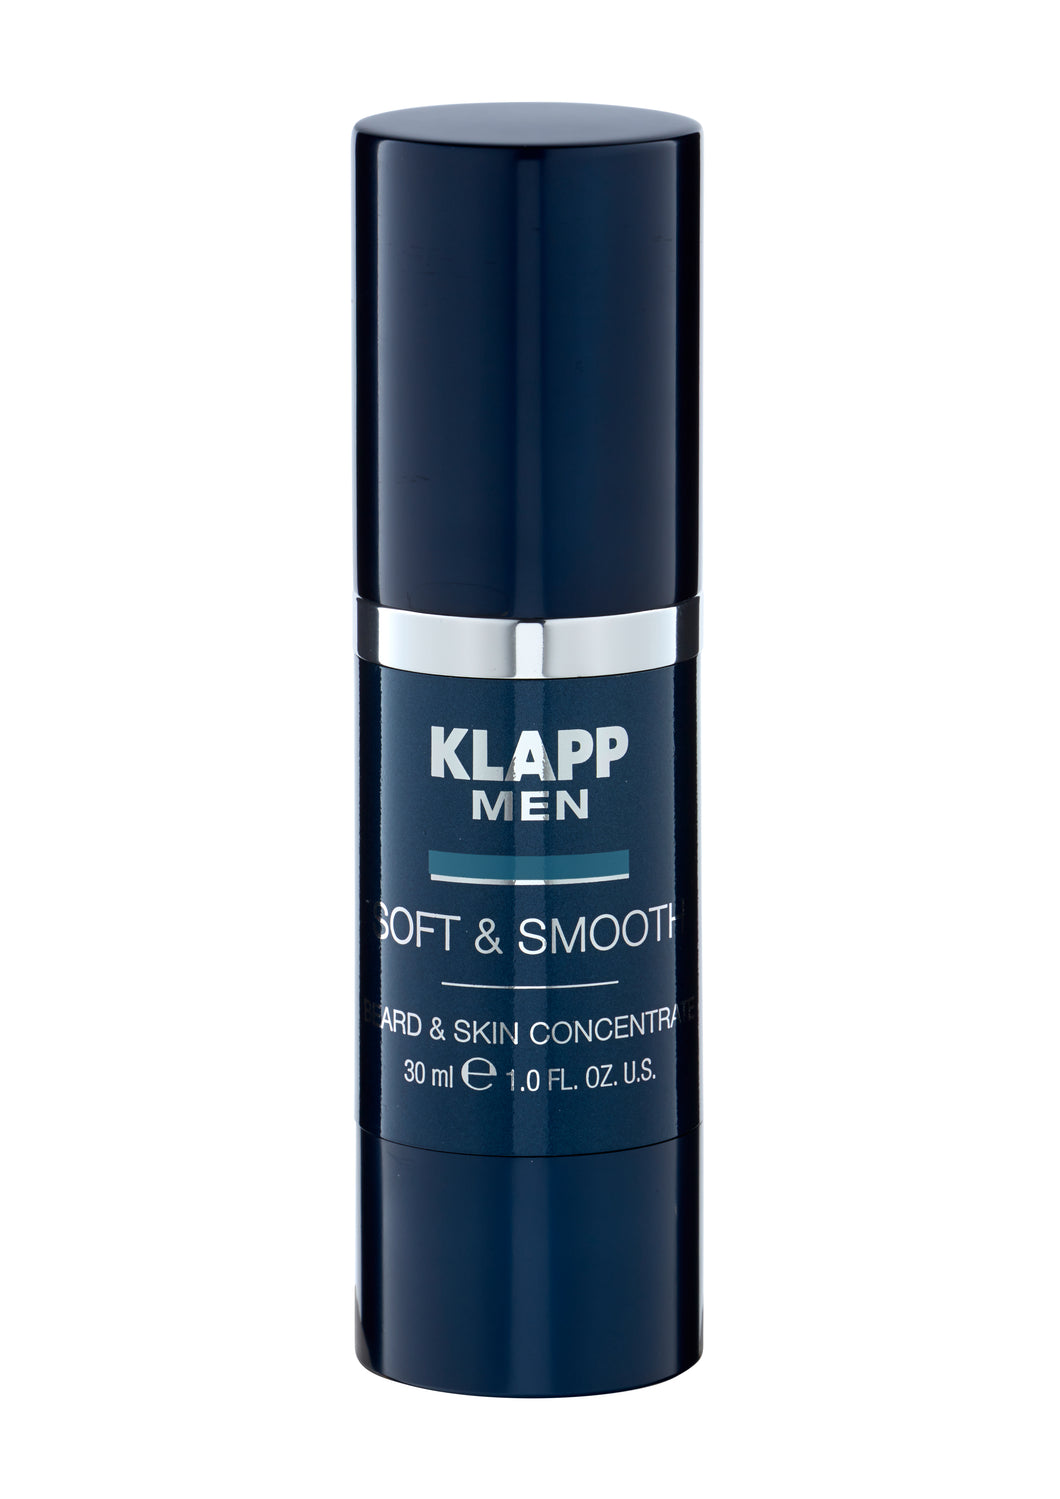 KLAPP MEN  Soft & Smooth - Beard & Skin Concentrate